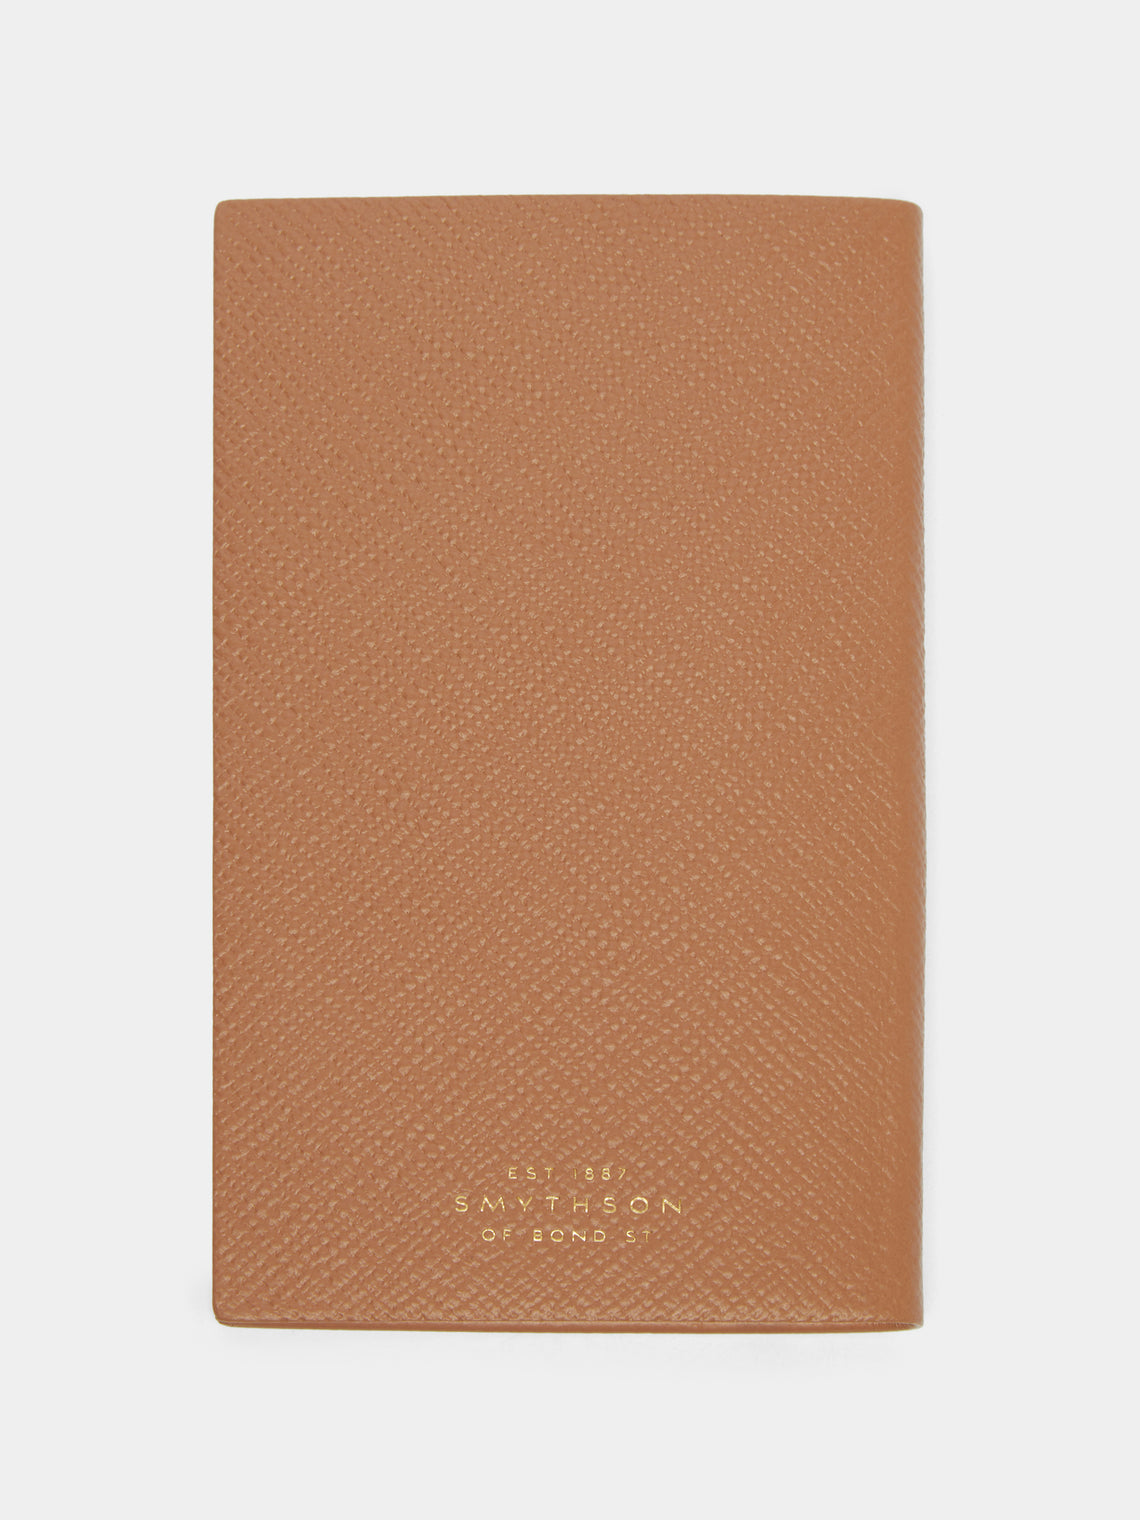 Smythson - Panama Leather Notebook - Tan - ABASK